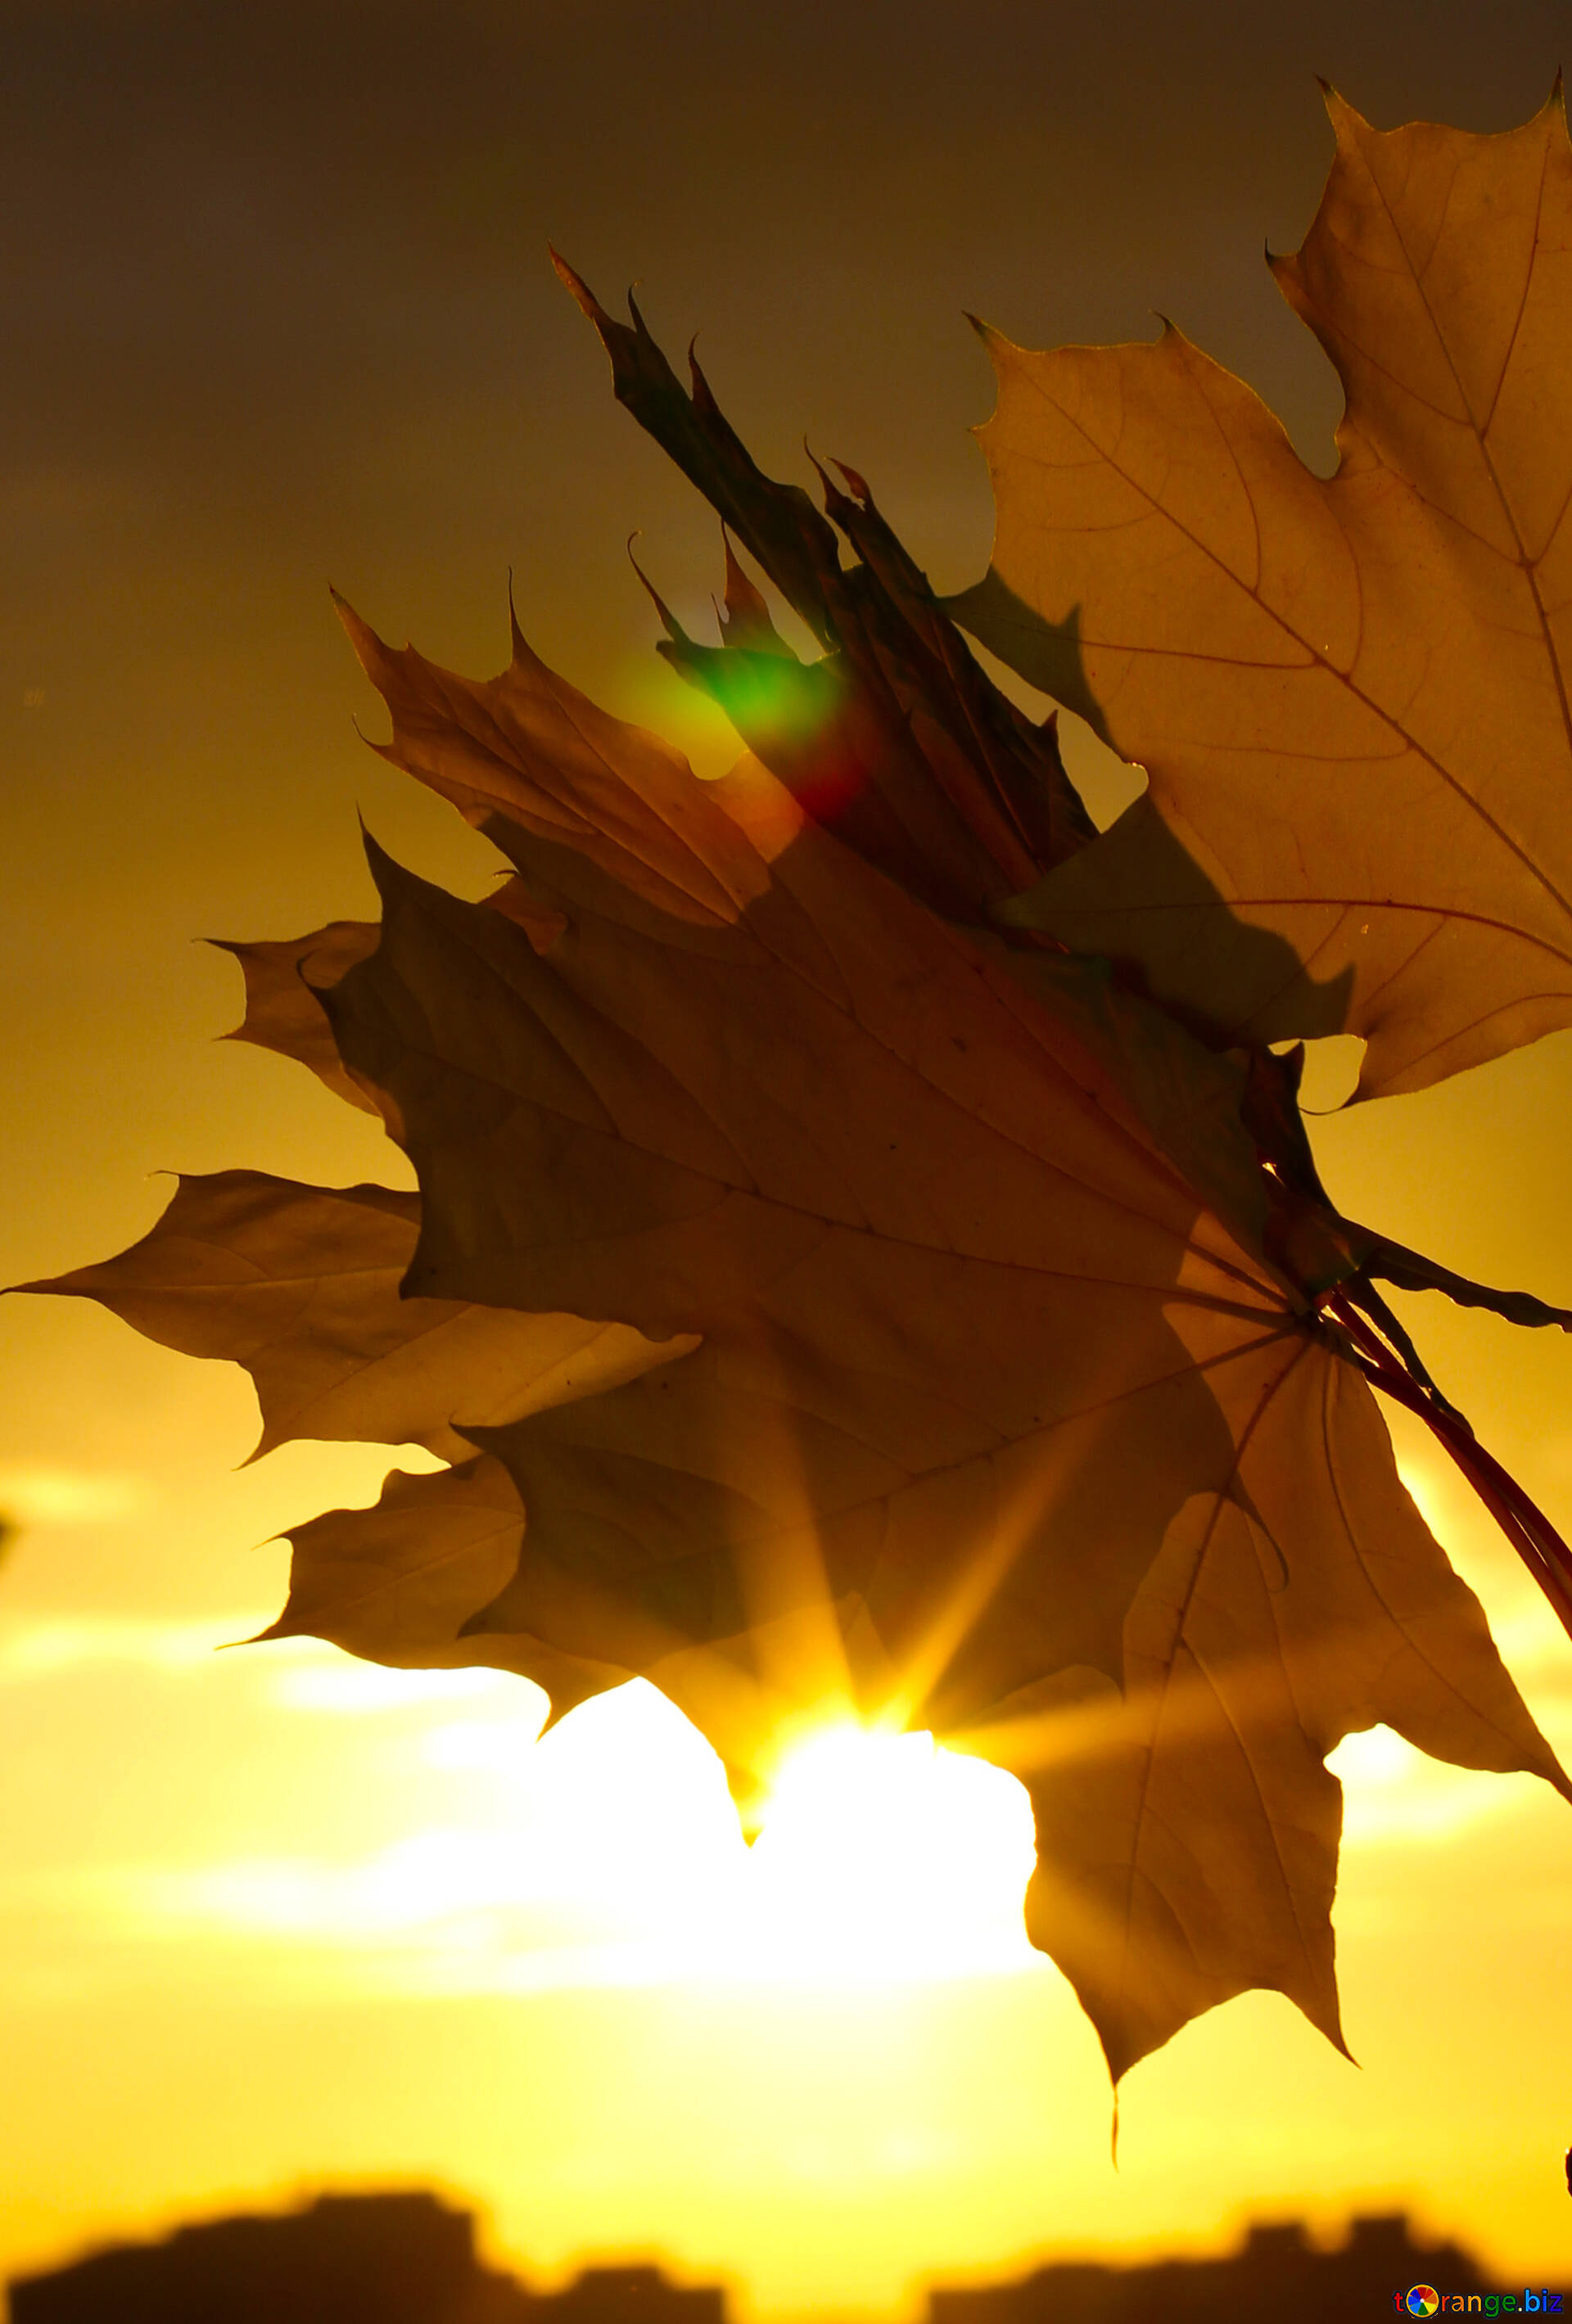 Bouquet Of Leaves Image Autumn Sunset Background Image Sunset № 40893. Torange.biz Free Pics On Cc By License